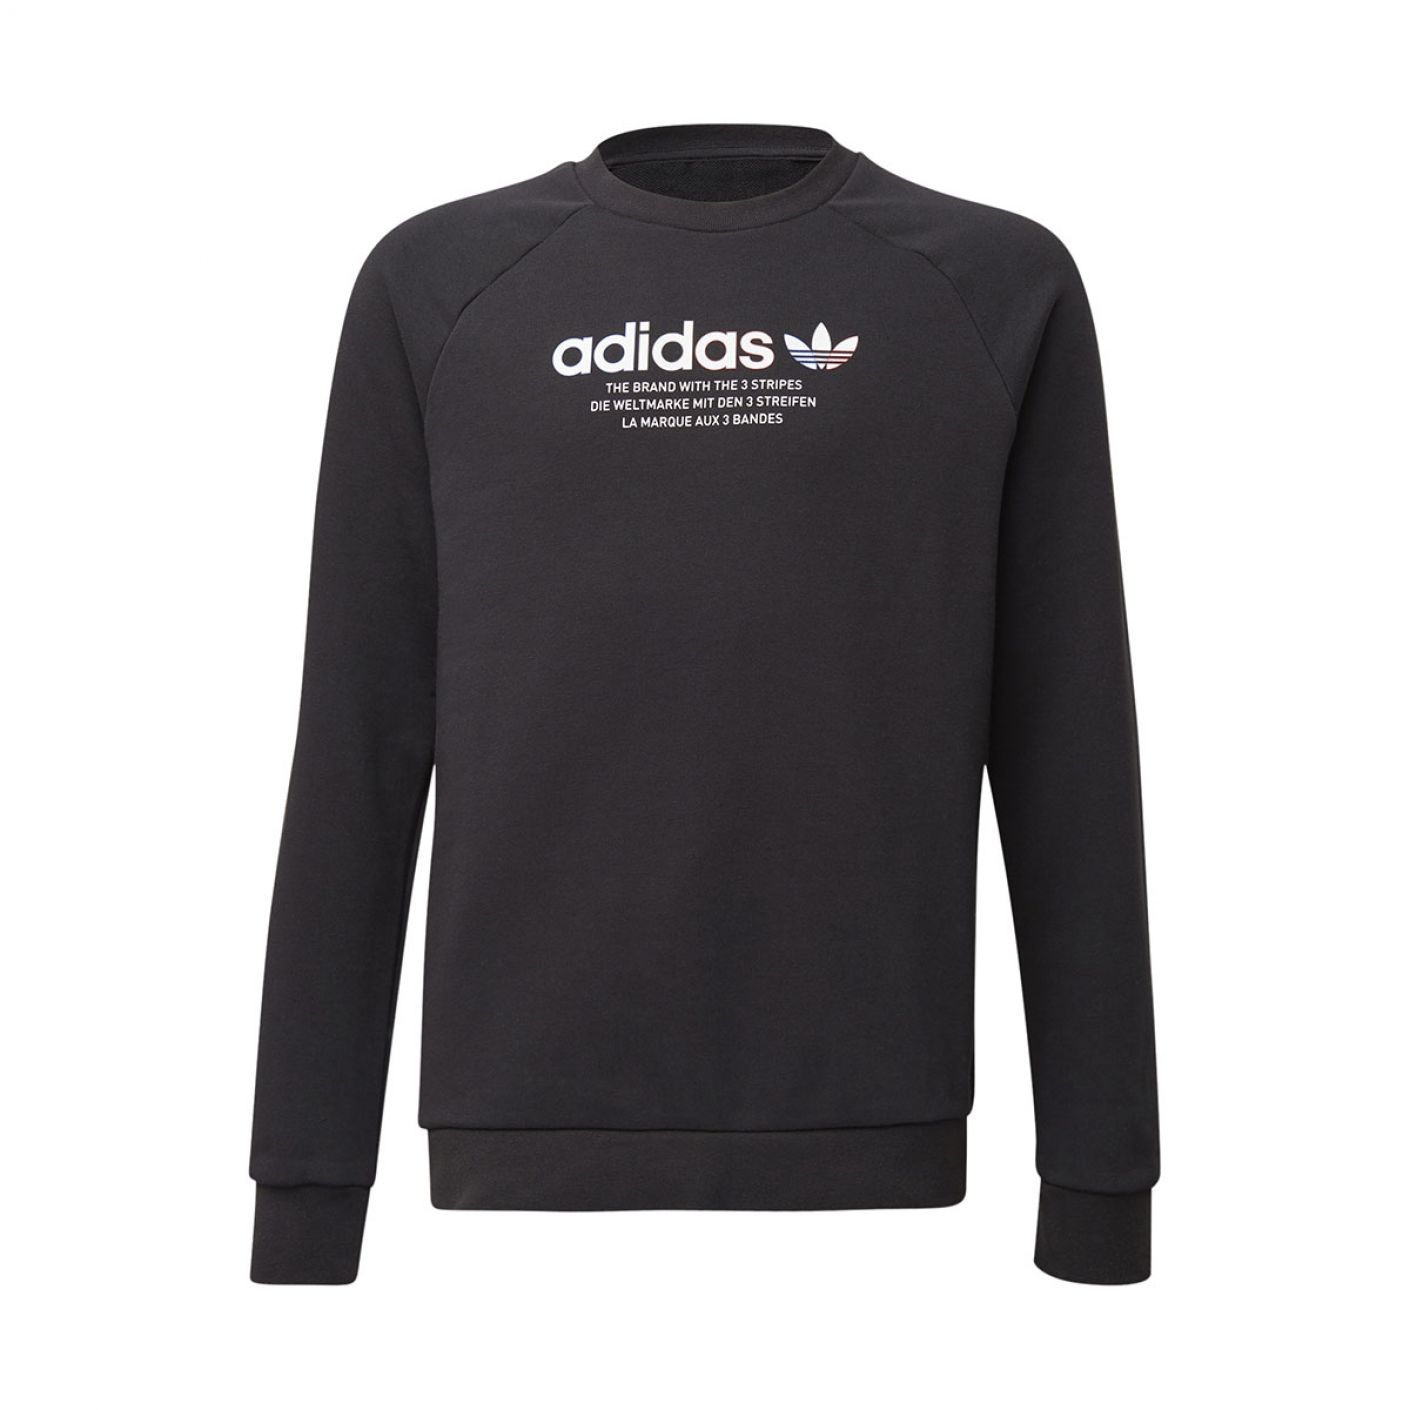 Adidas Sweatshirt Adicolor Crew Black for Kids